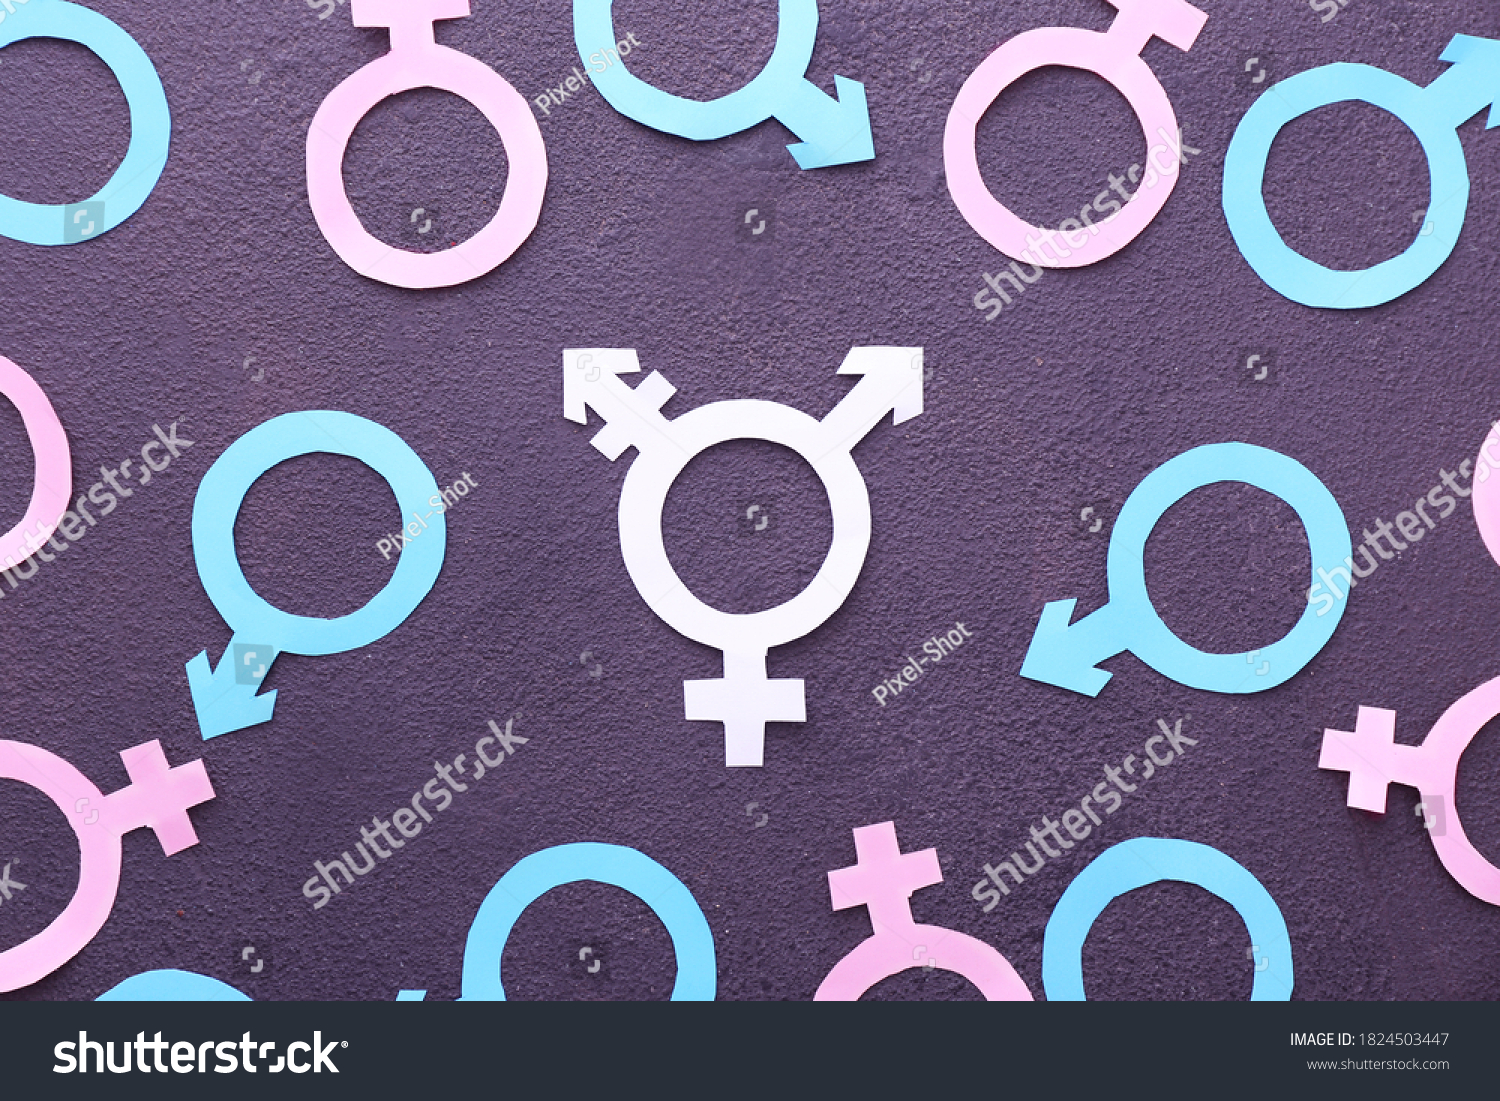 Symbols of man, woman and transgender on dark background #1824503447